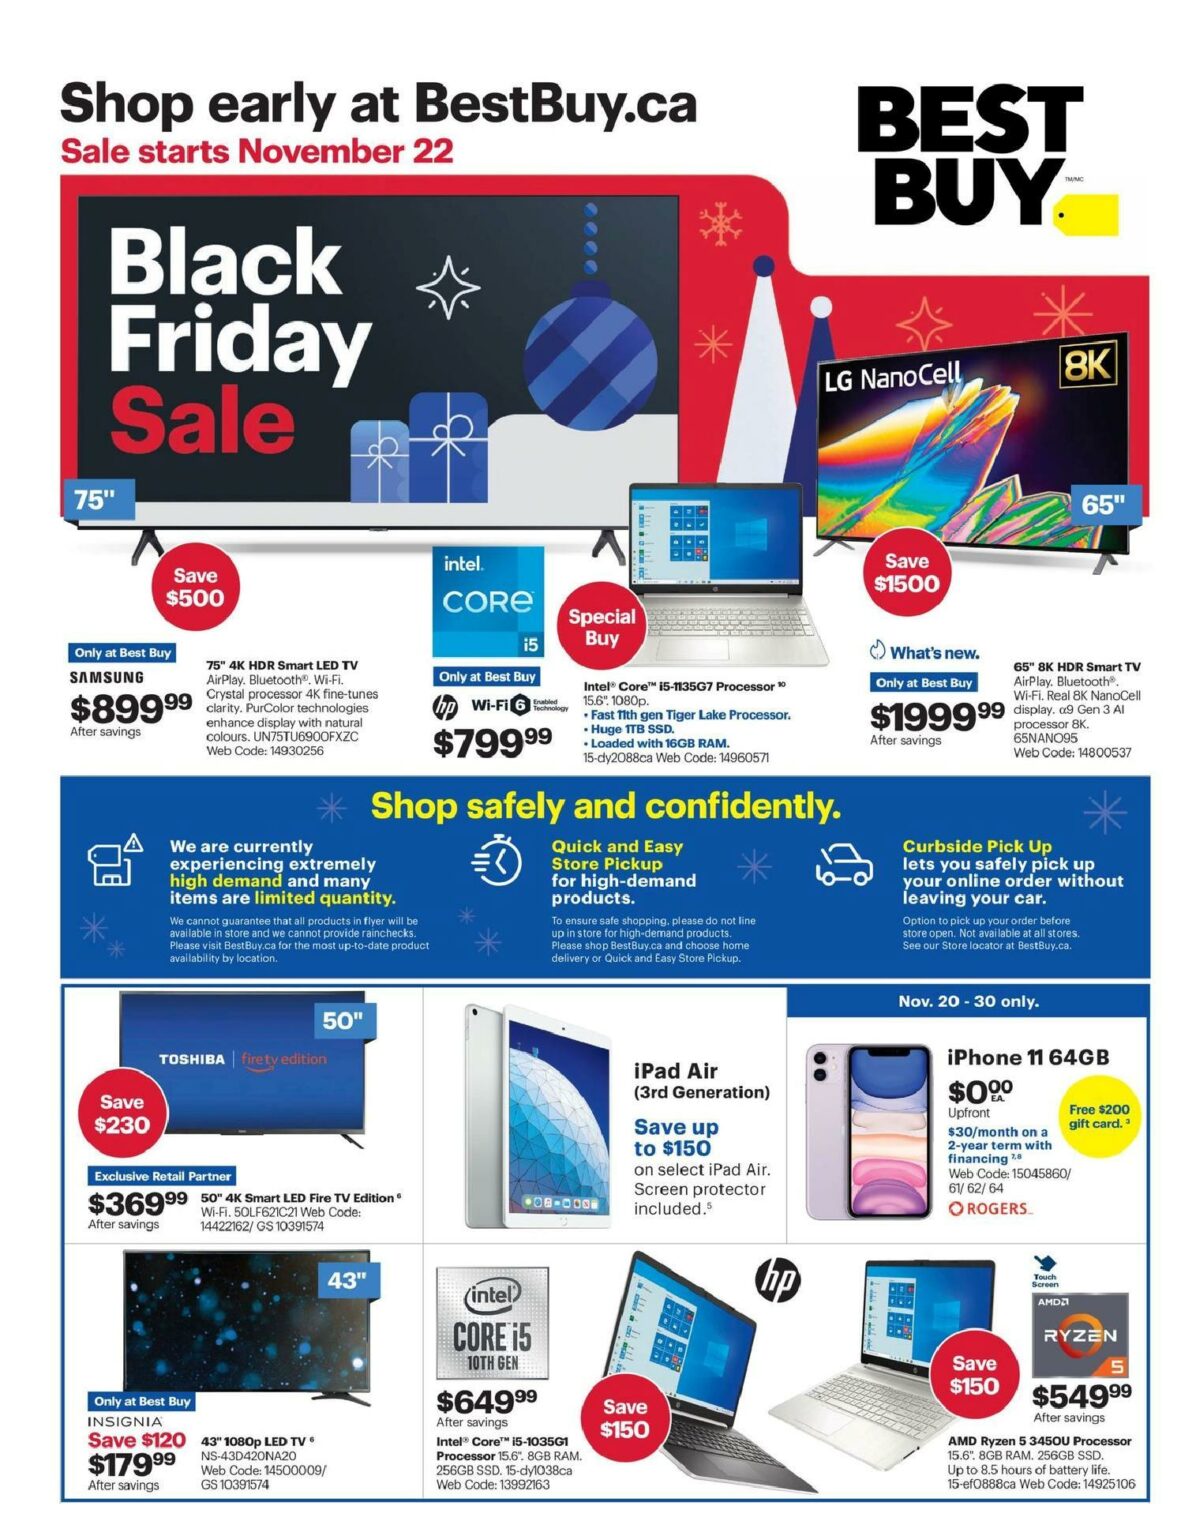 Best Buy Black Friday Flyer Deals 2020 Canada - What Time Can You Buy Black Friday Deals Online